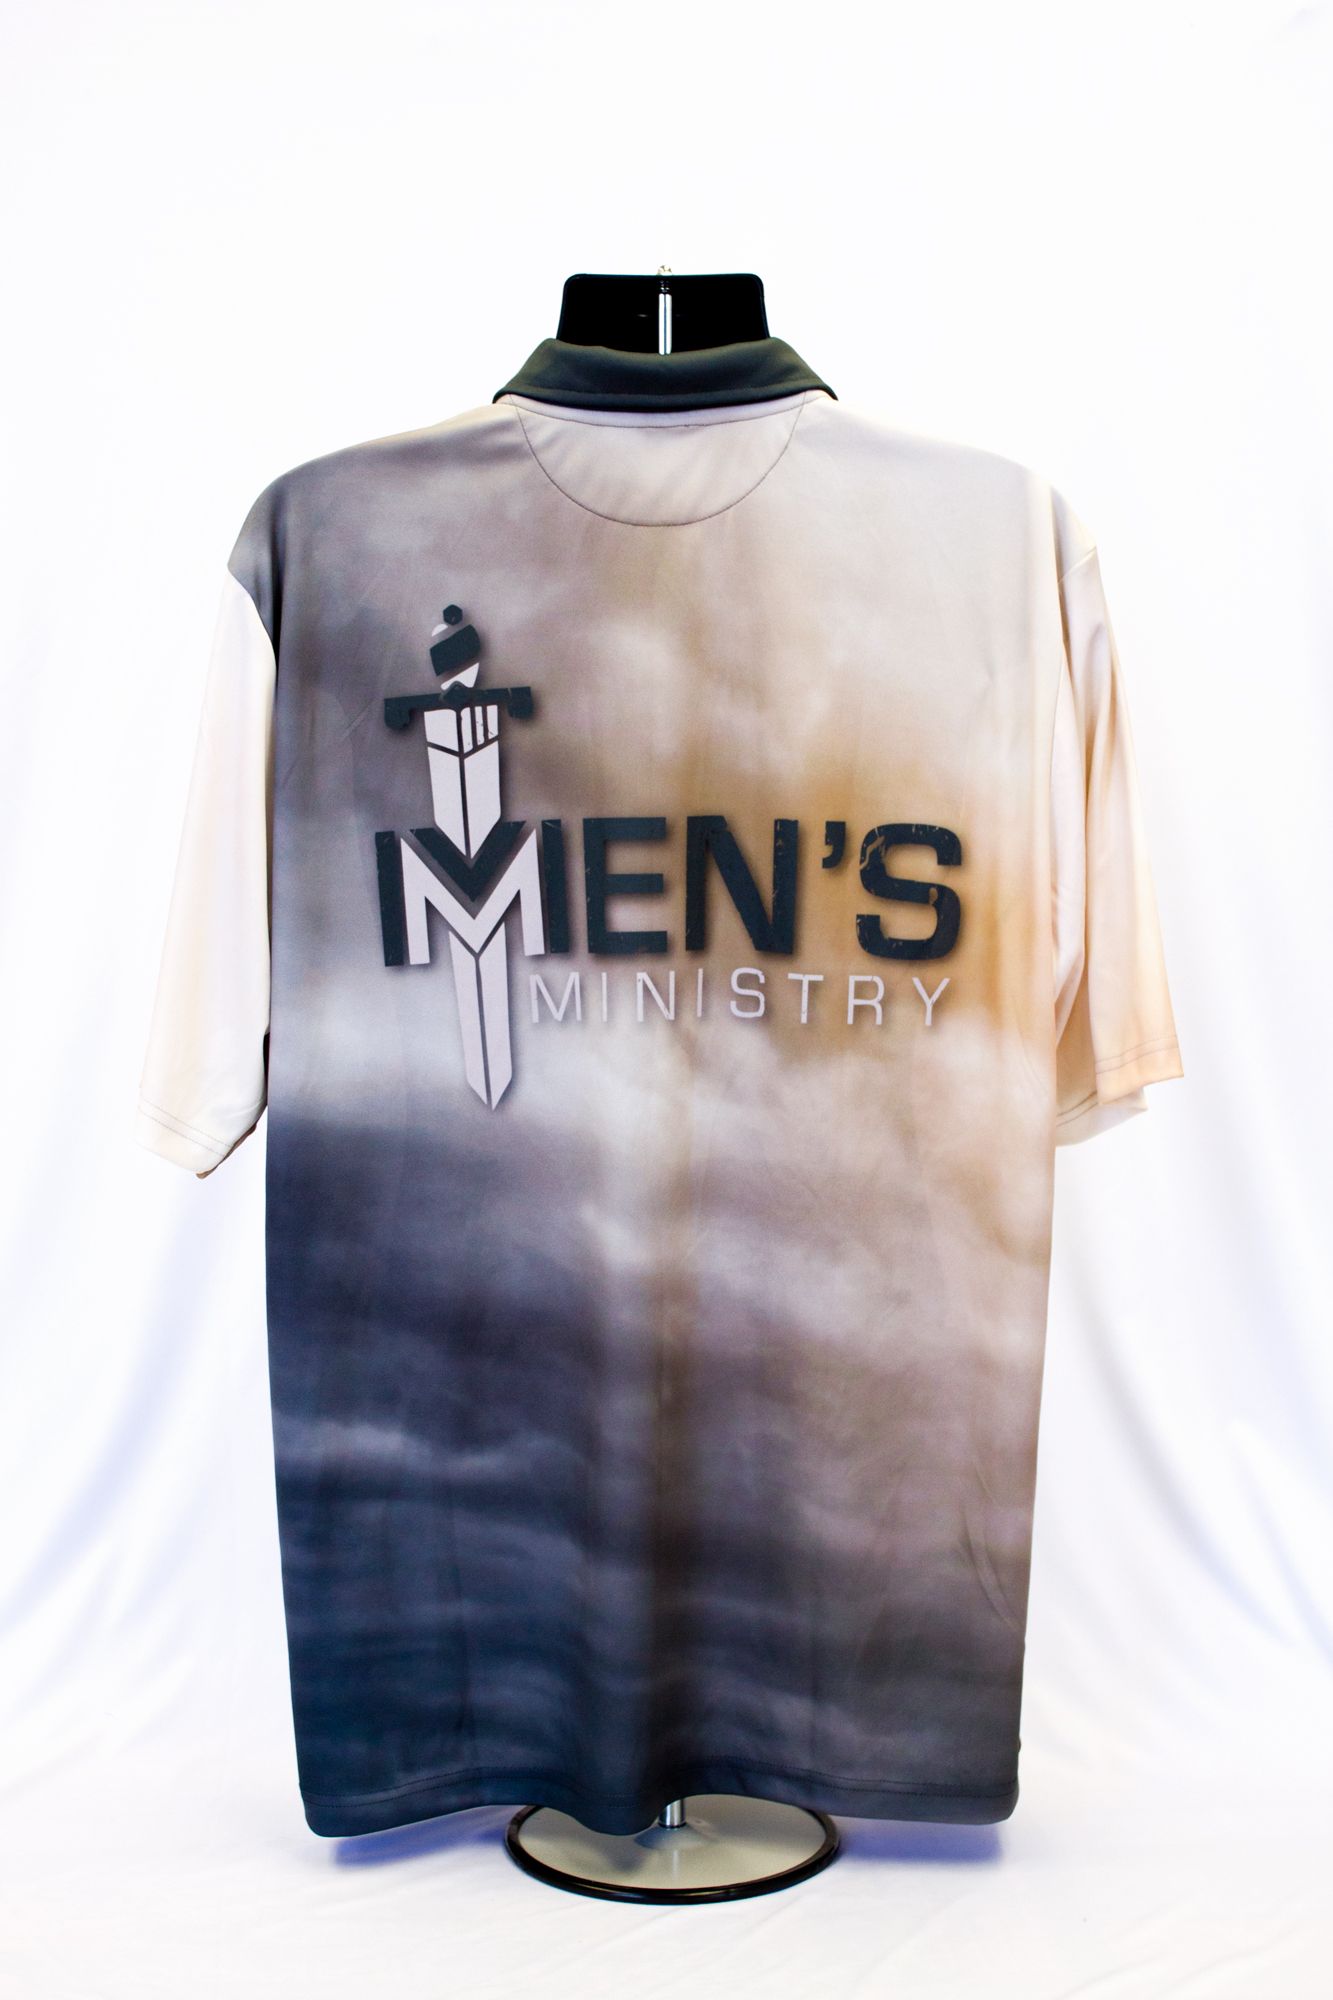 Men's Ministry Group - Back